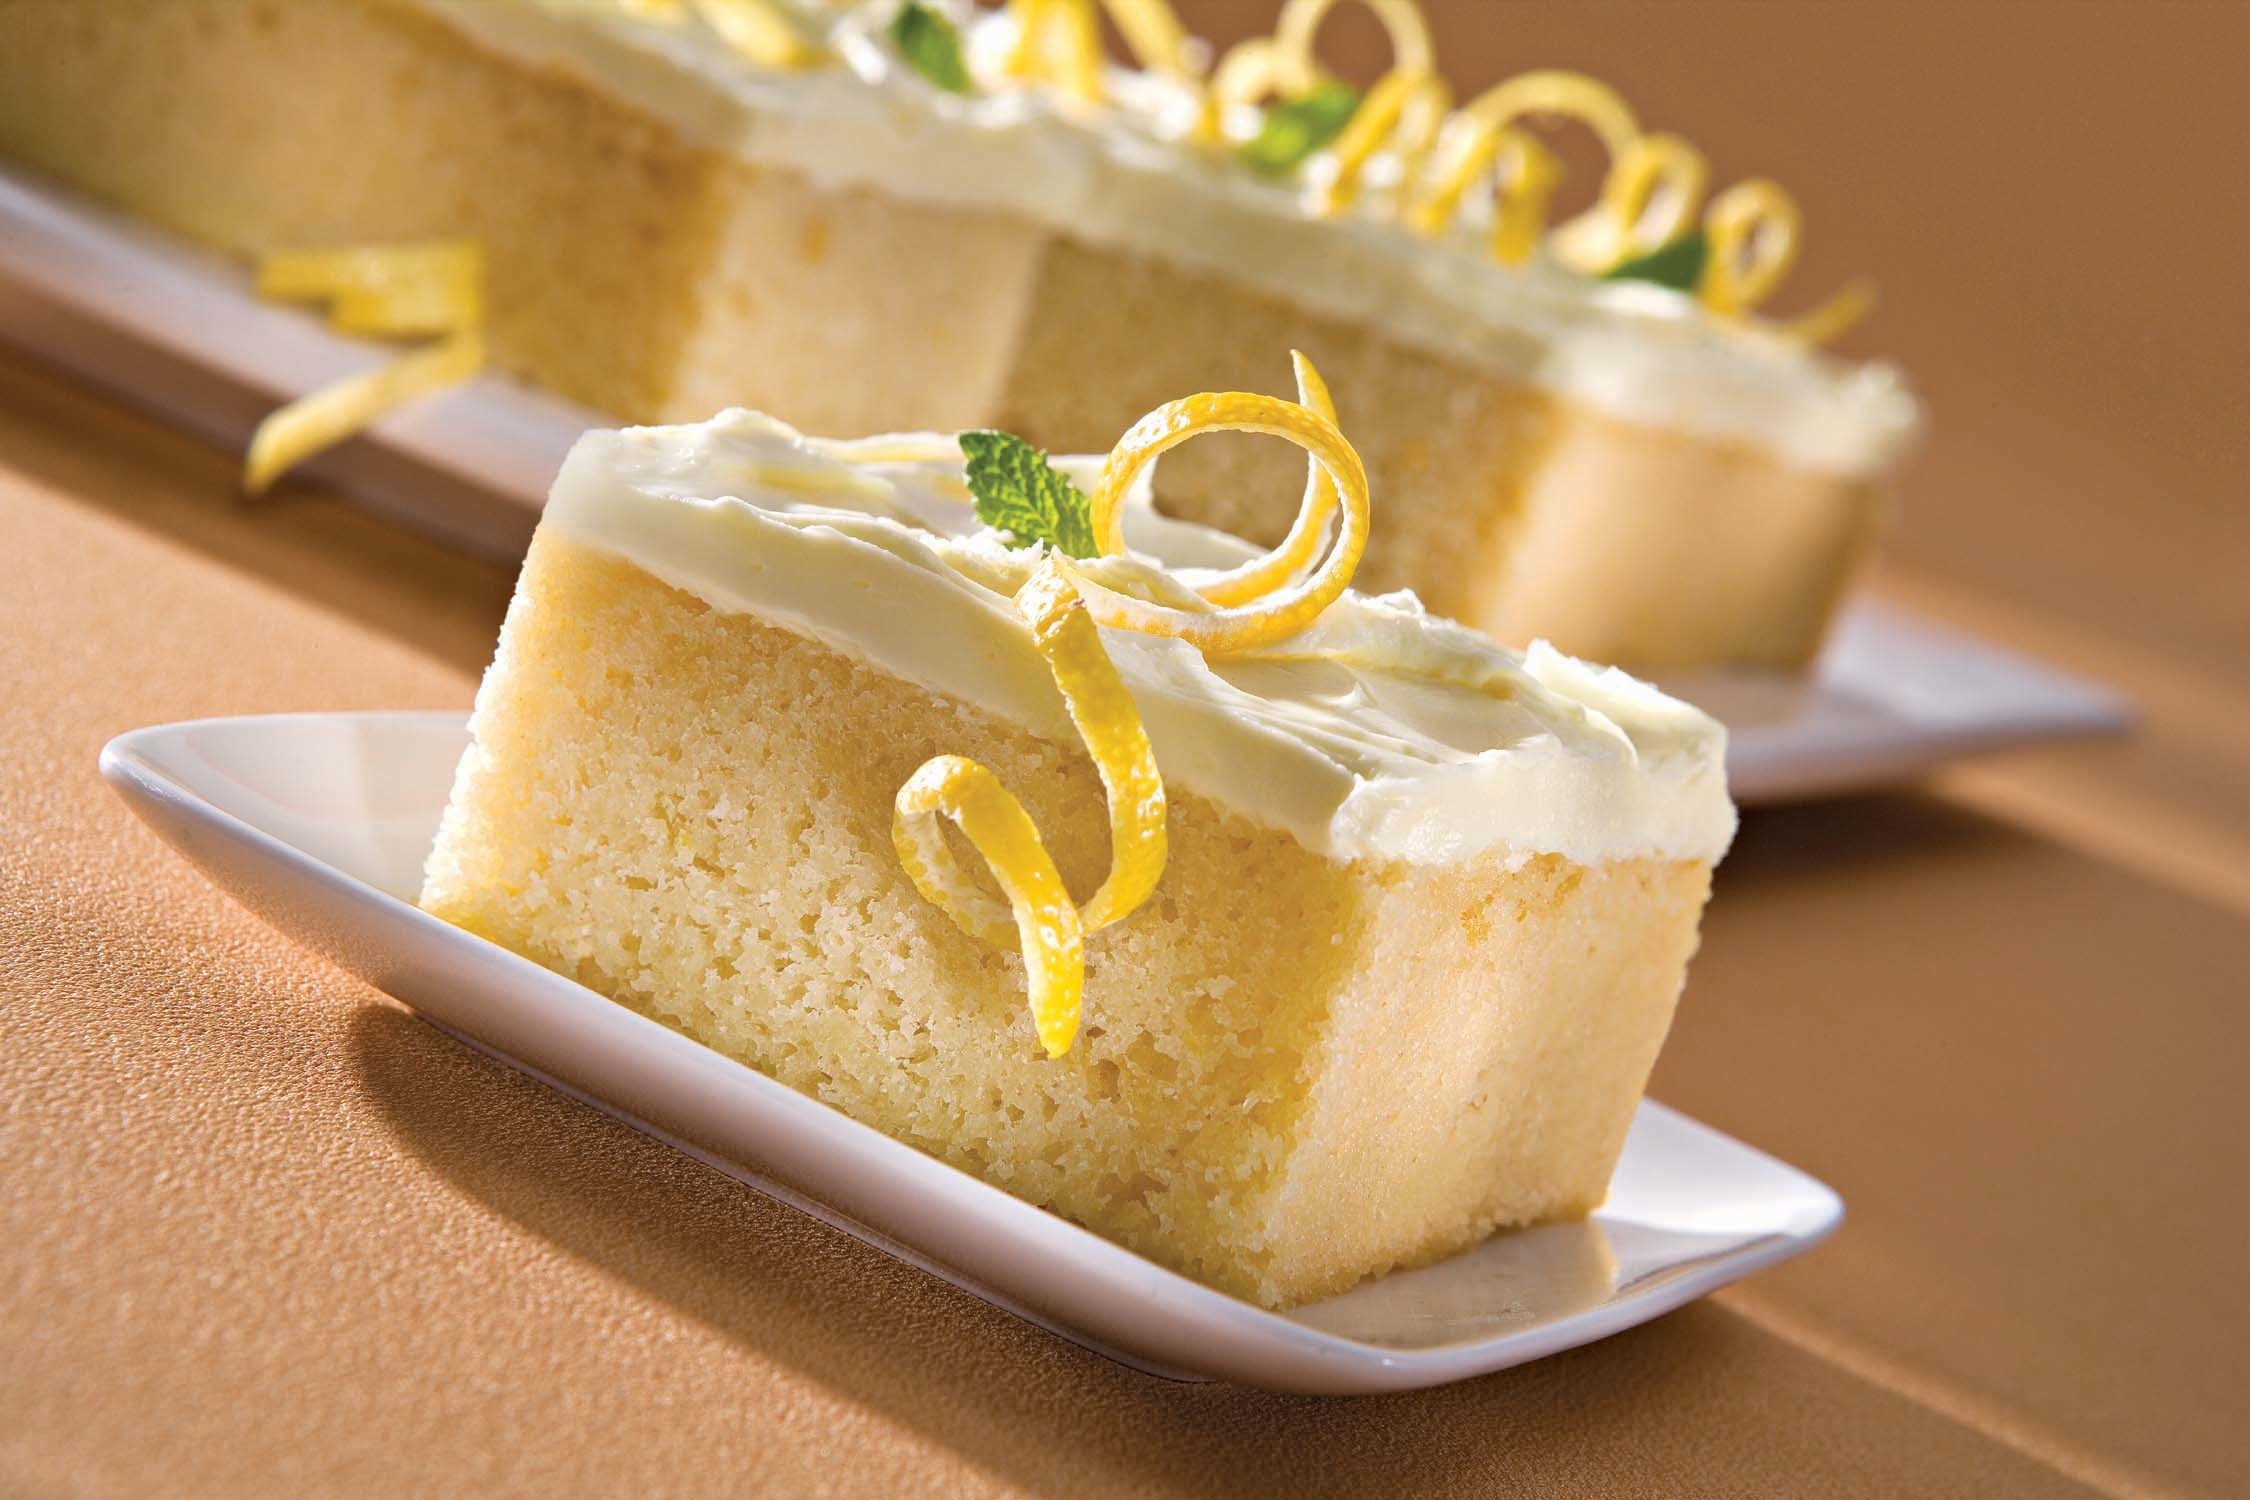 Lemon__cakes